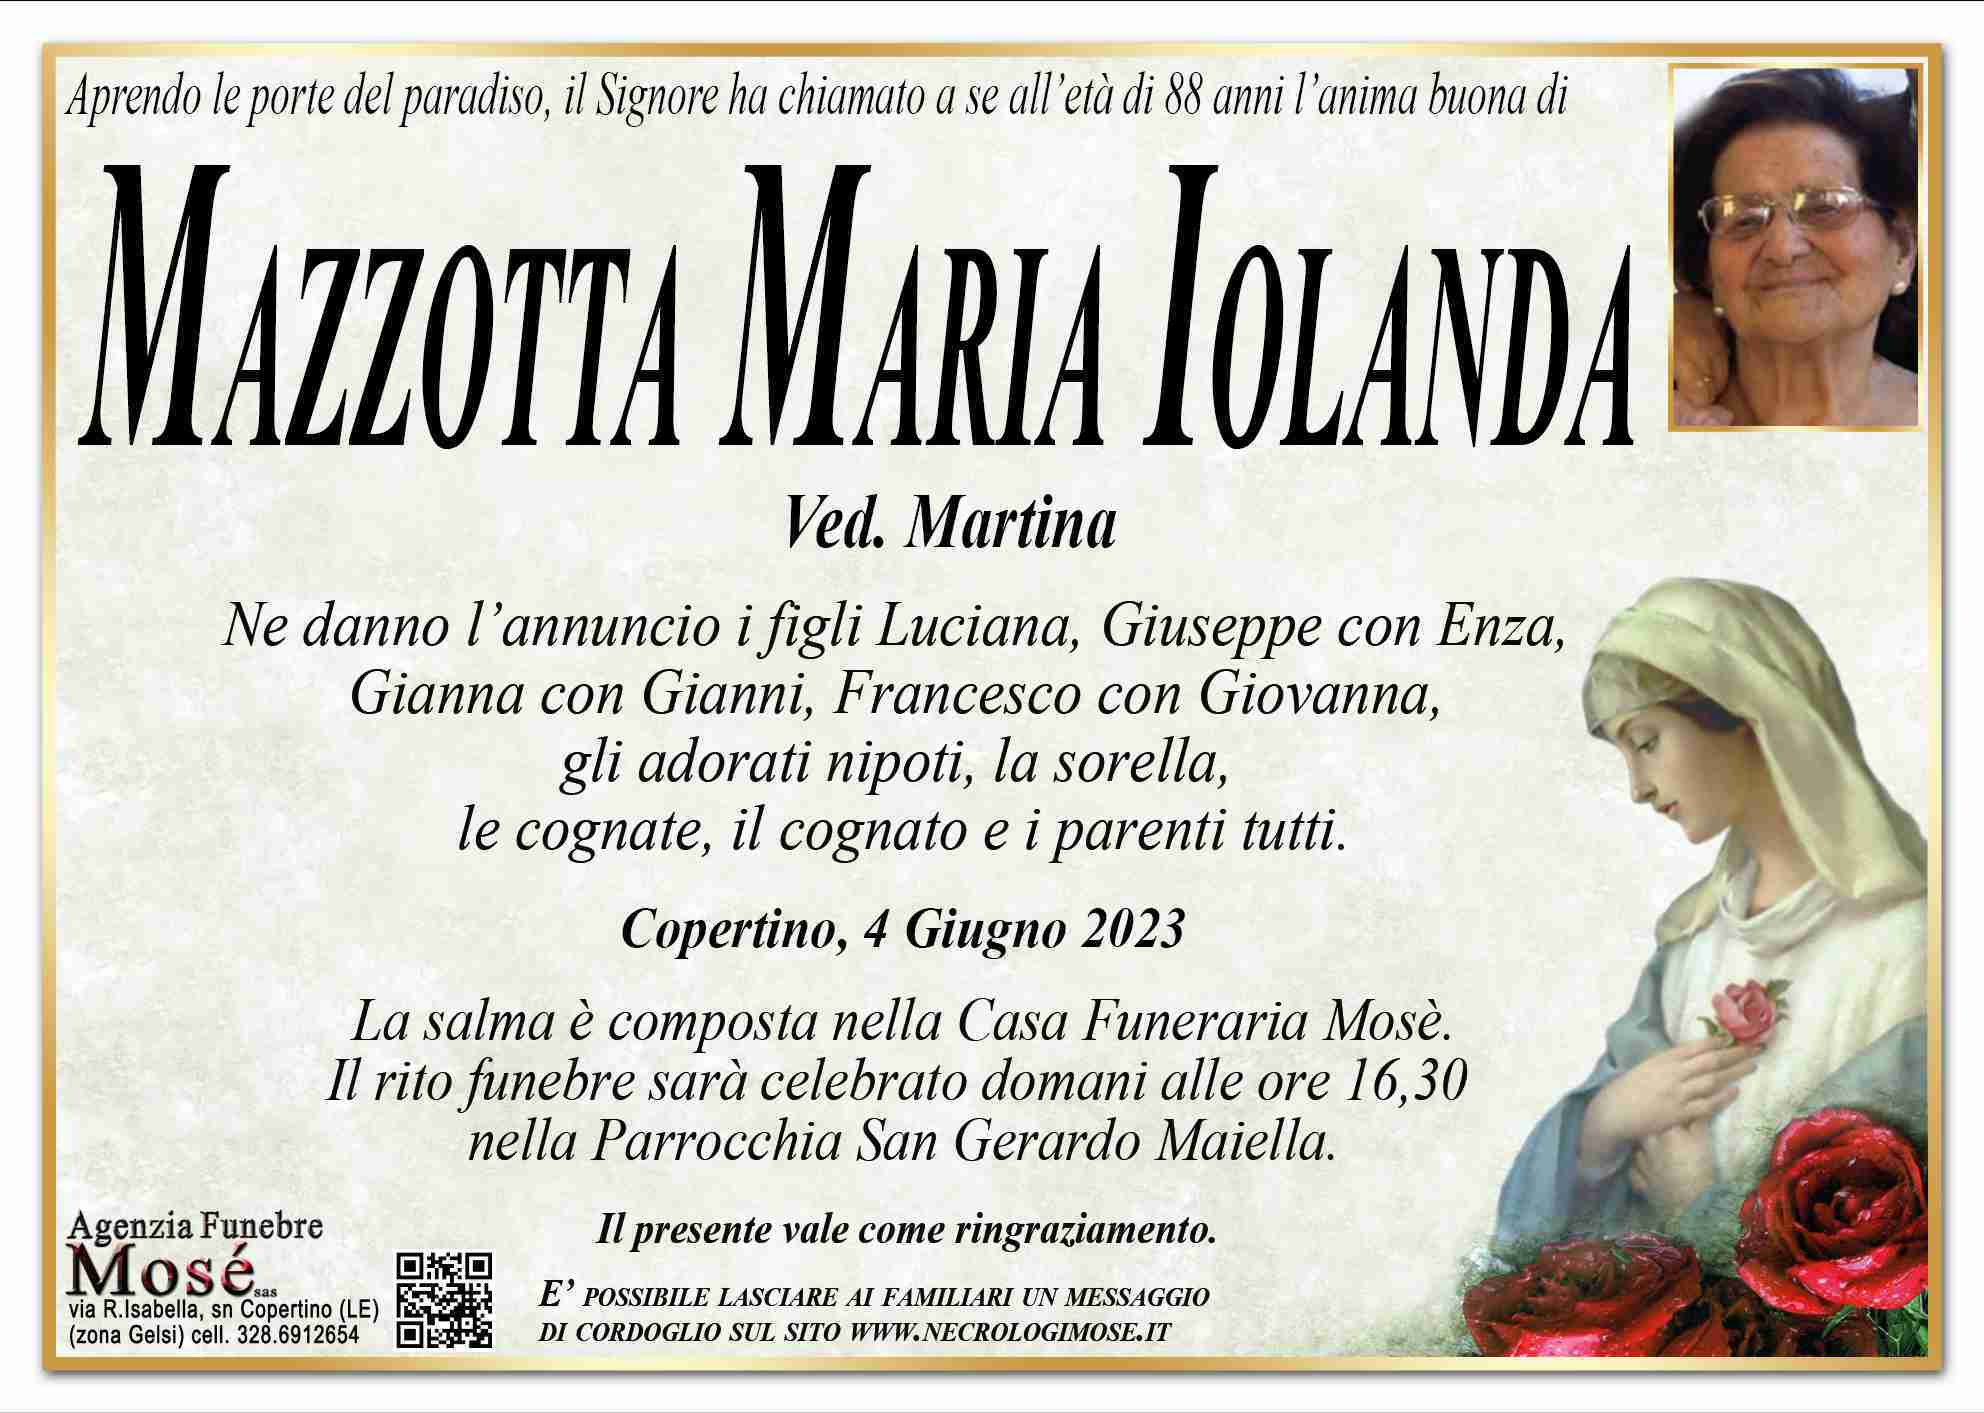 Maria Iolanda Mazzotta